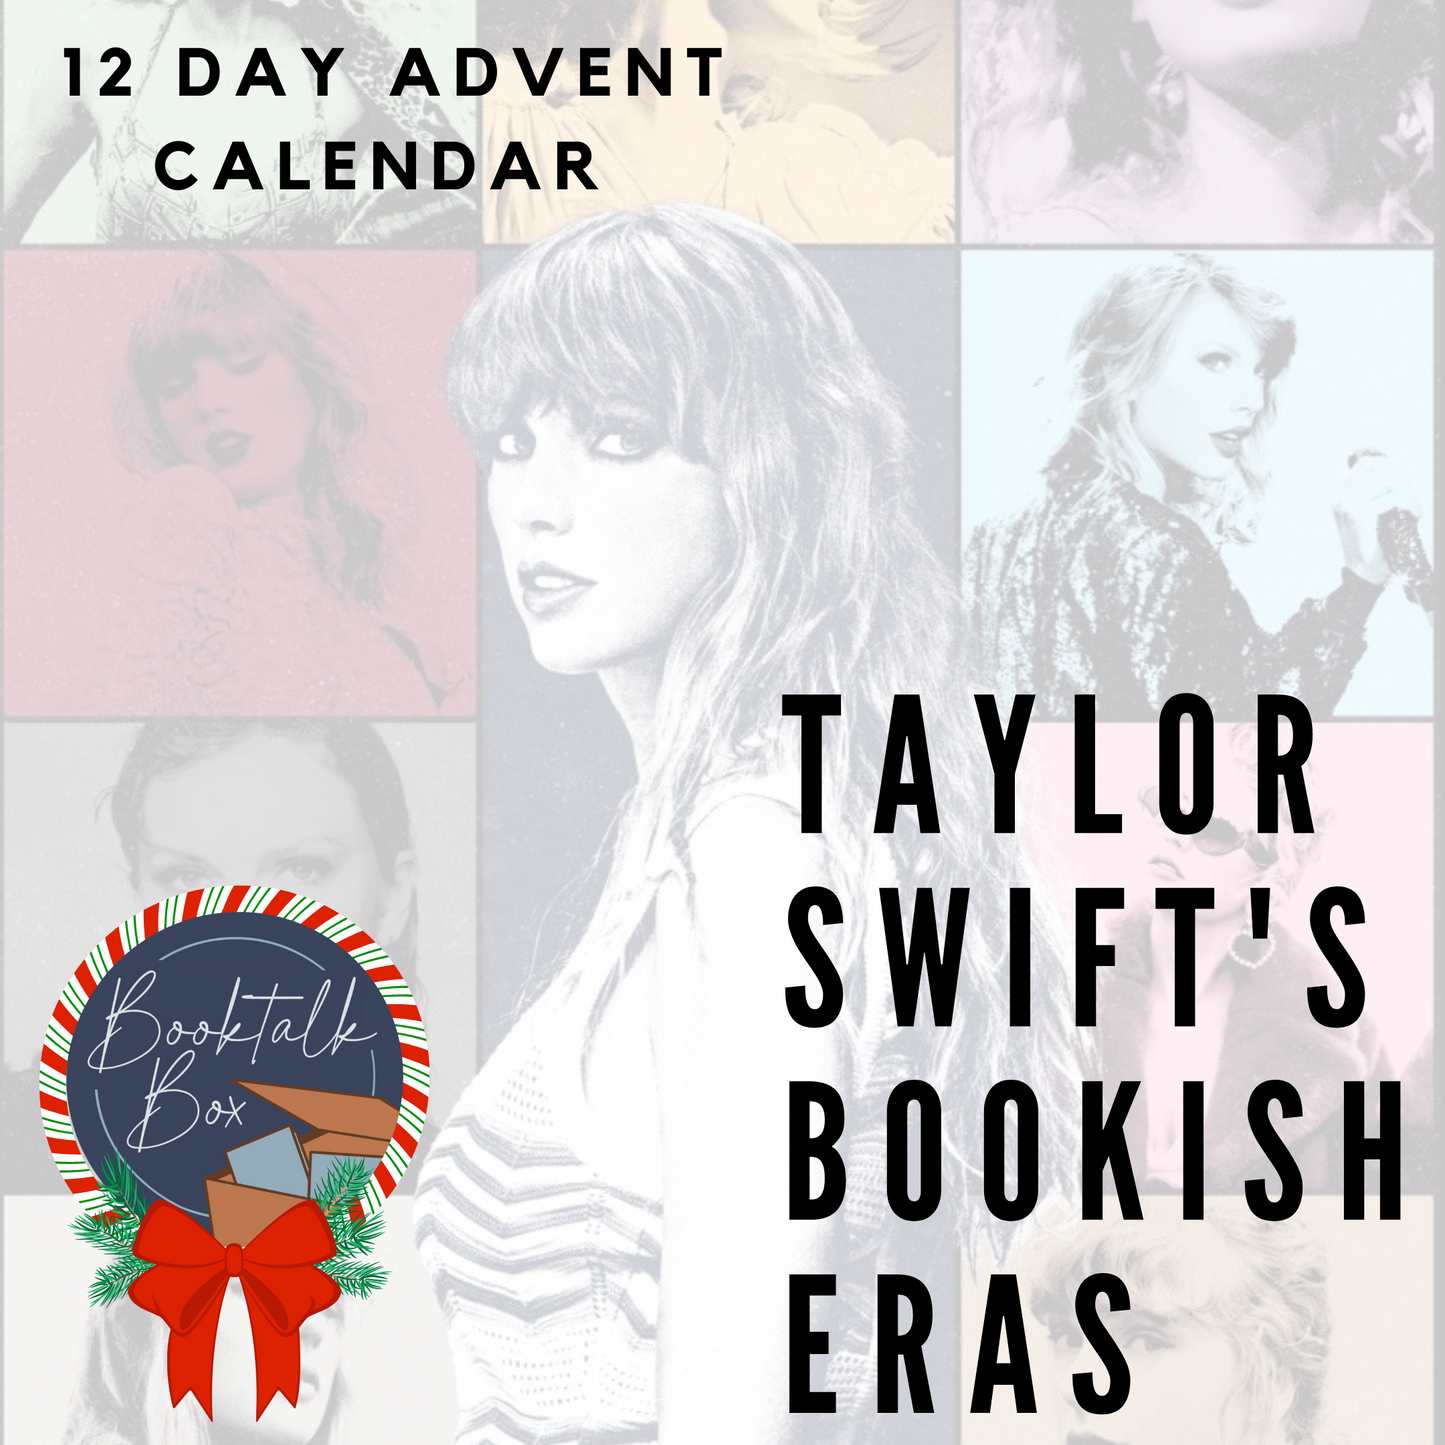 PRE-ORDER TAYLOR SWIFT'S BOOKISH ERA'S ADVENT CALENDAR (10 BOOKS)